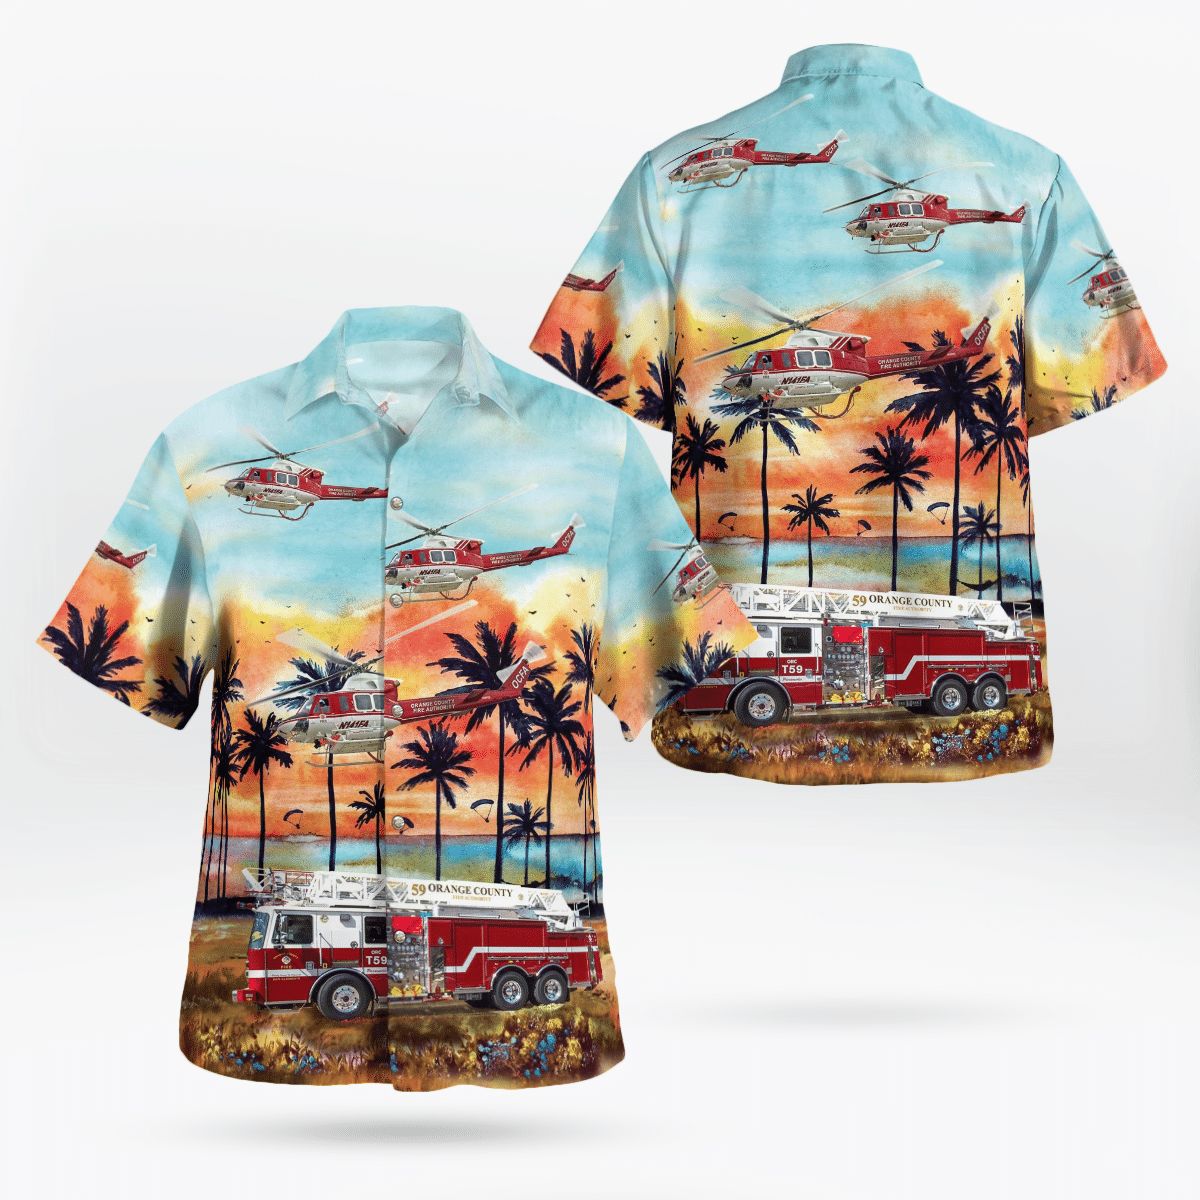 Listed below are some High-quality Aloha Shirt 379